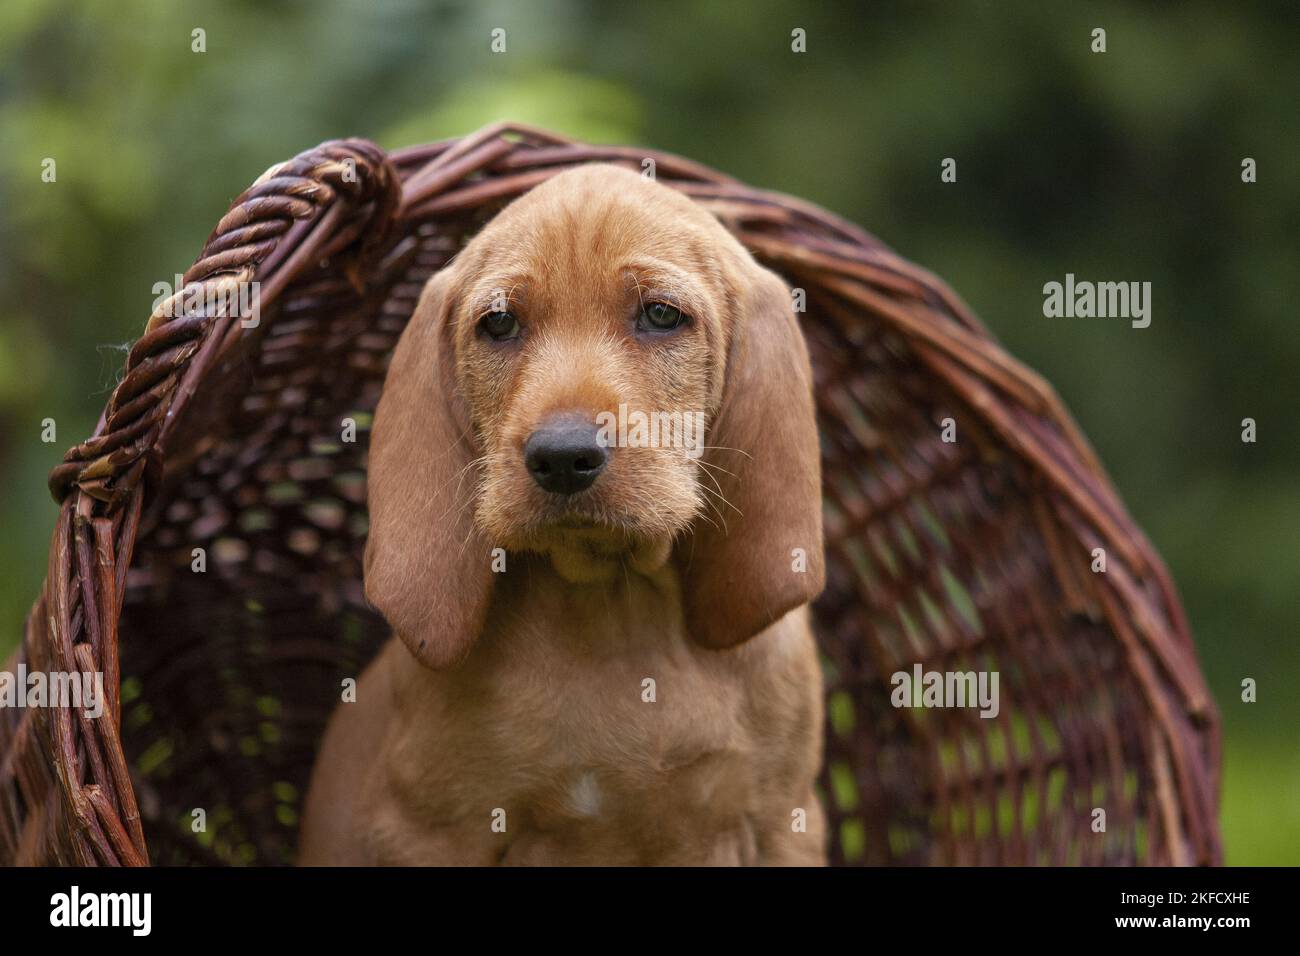 Griffon Fauve de Bretagne puppy Stock Photo